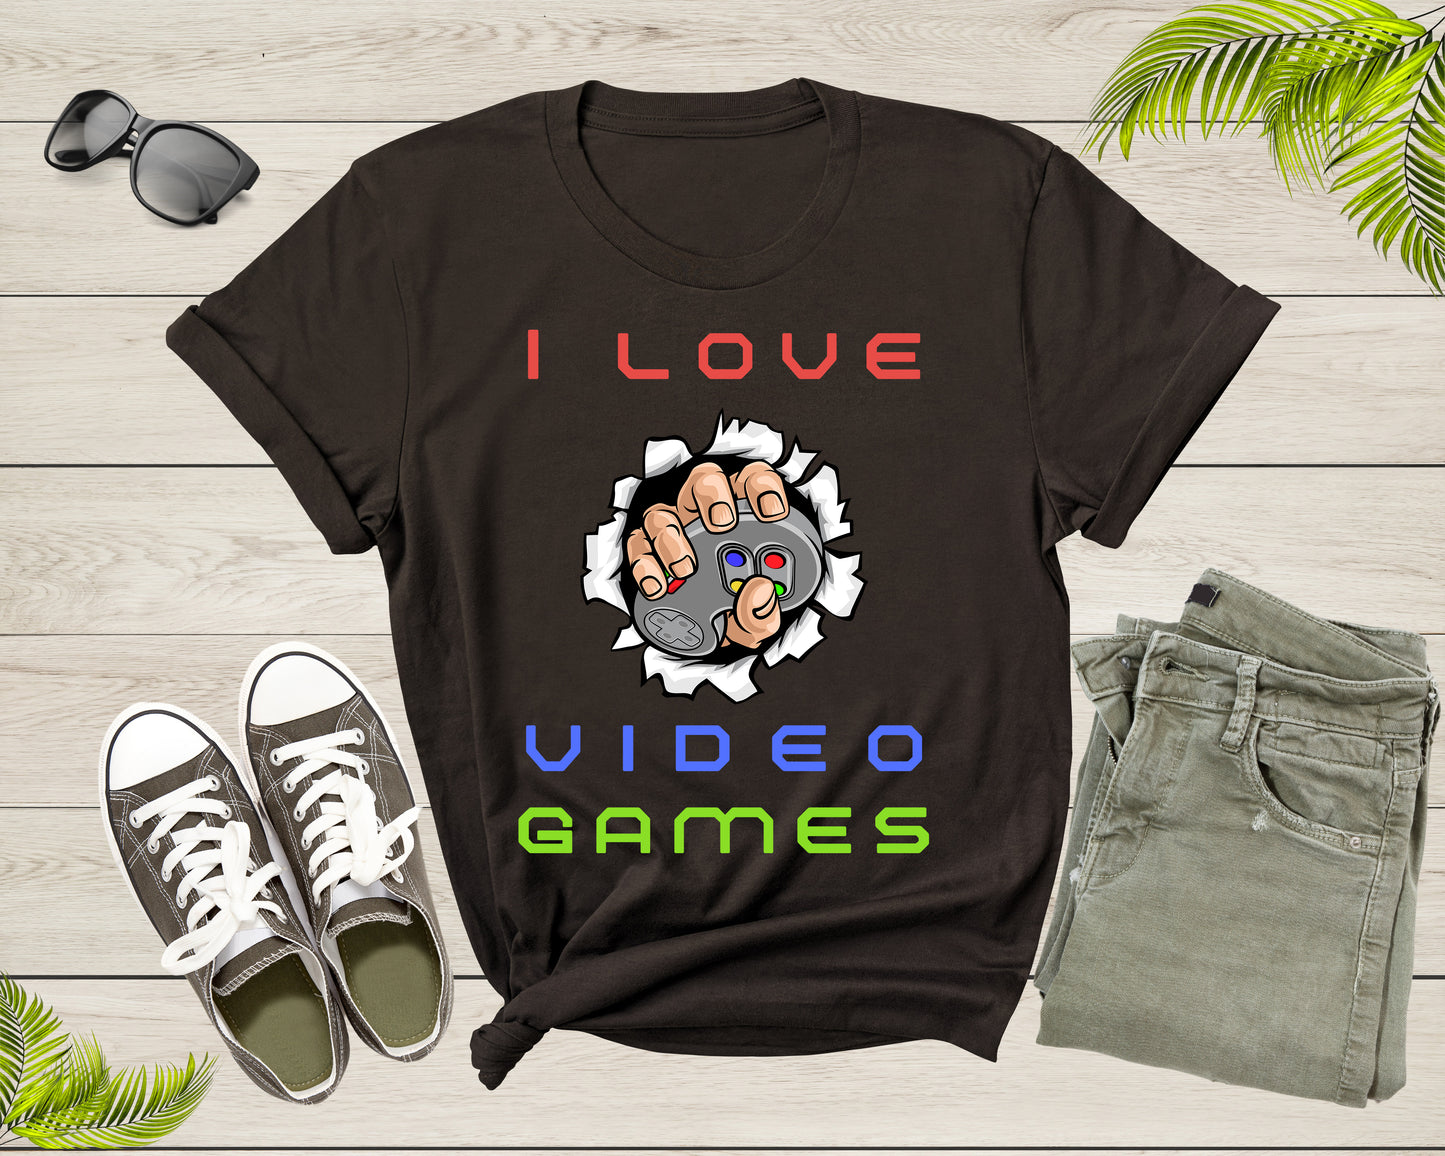 I Love Video Games Gamer Player Computer Game Controller T-Shirt Gamer Game Lover Gift T Shirt for Men Women Kids Boys Girls Teens Tshirt